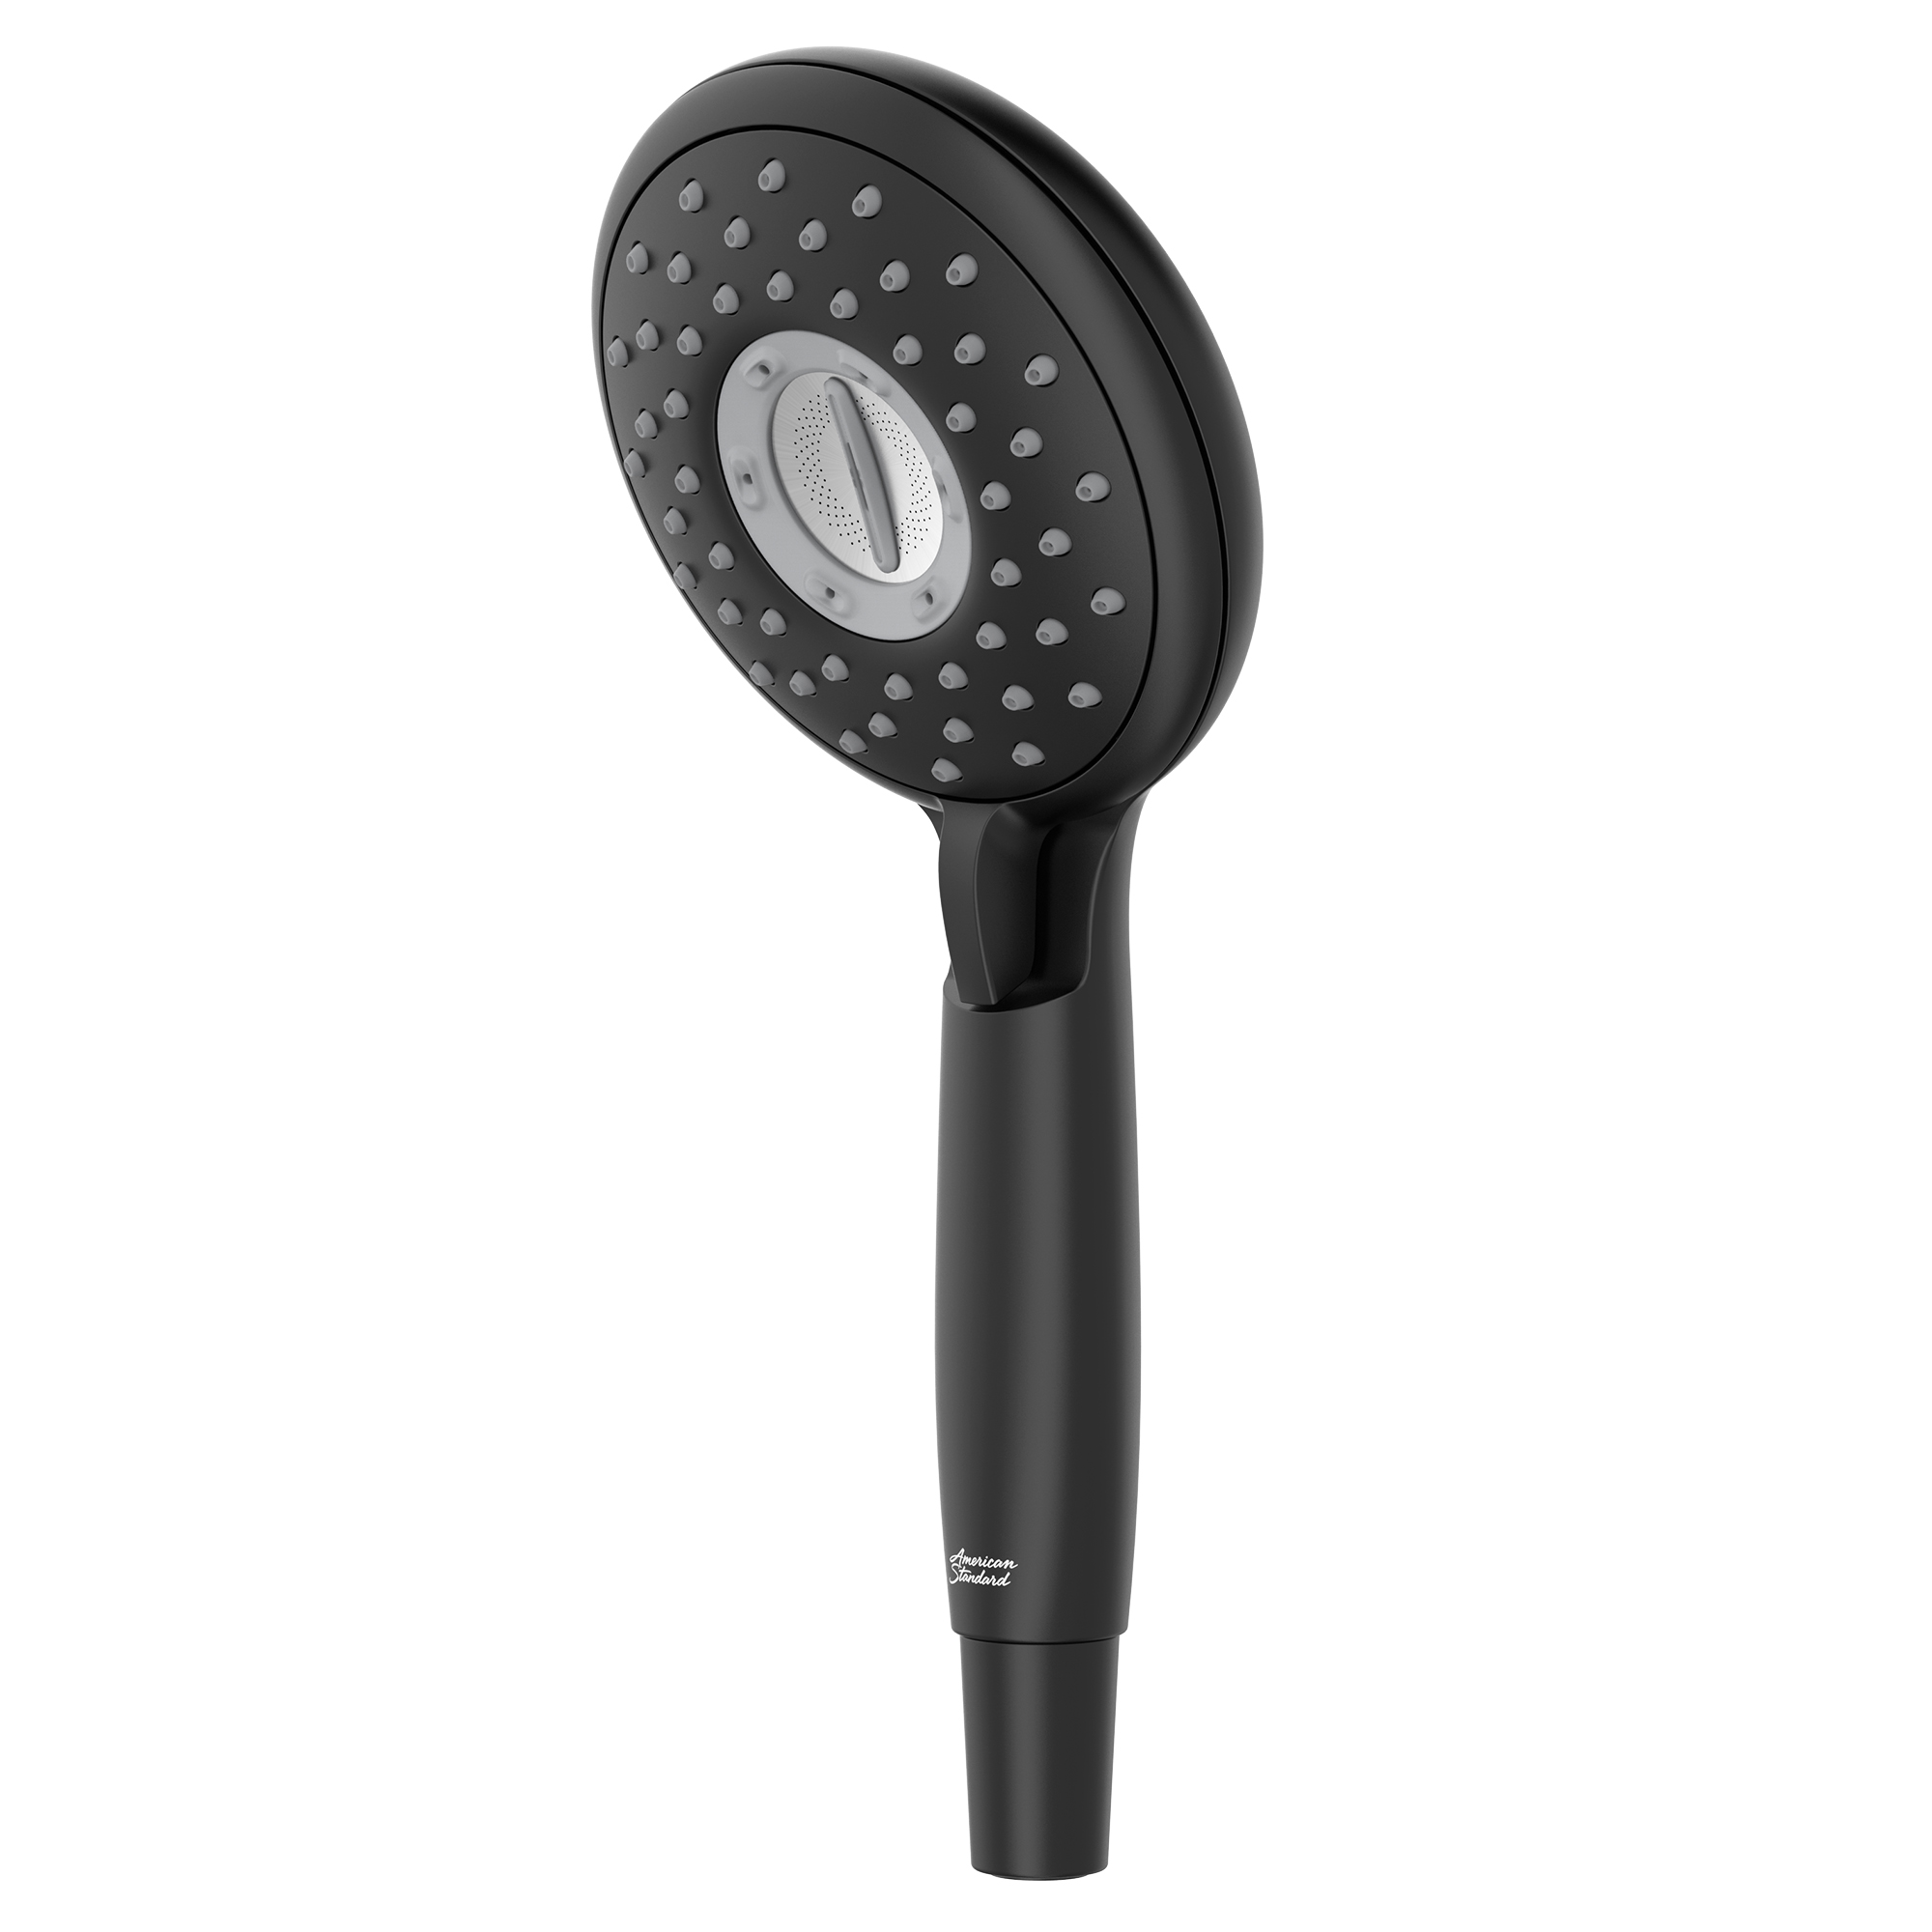 Spectra® Handheld 1.8 gpm/6.8 L/min 5-Inch 4-Function Hand Shower